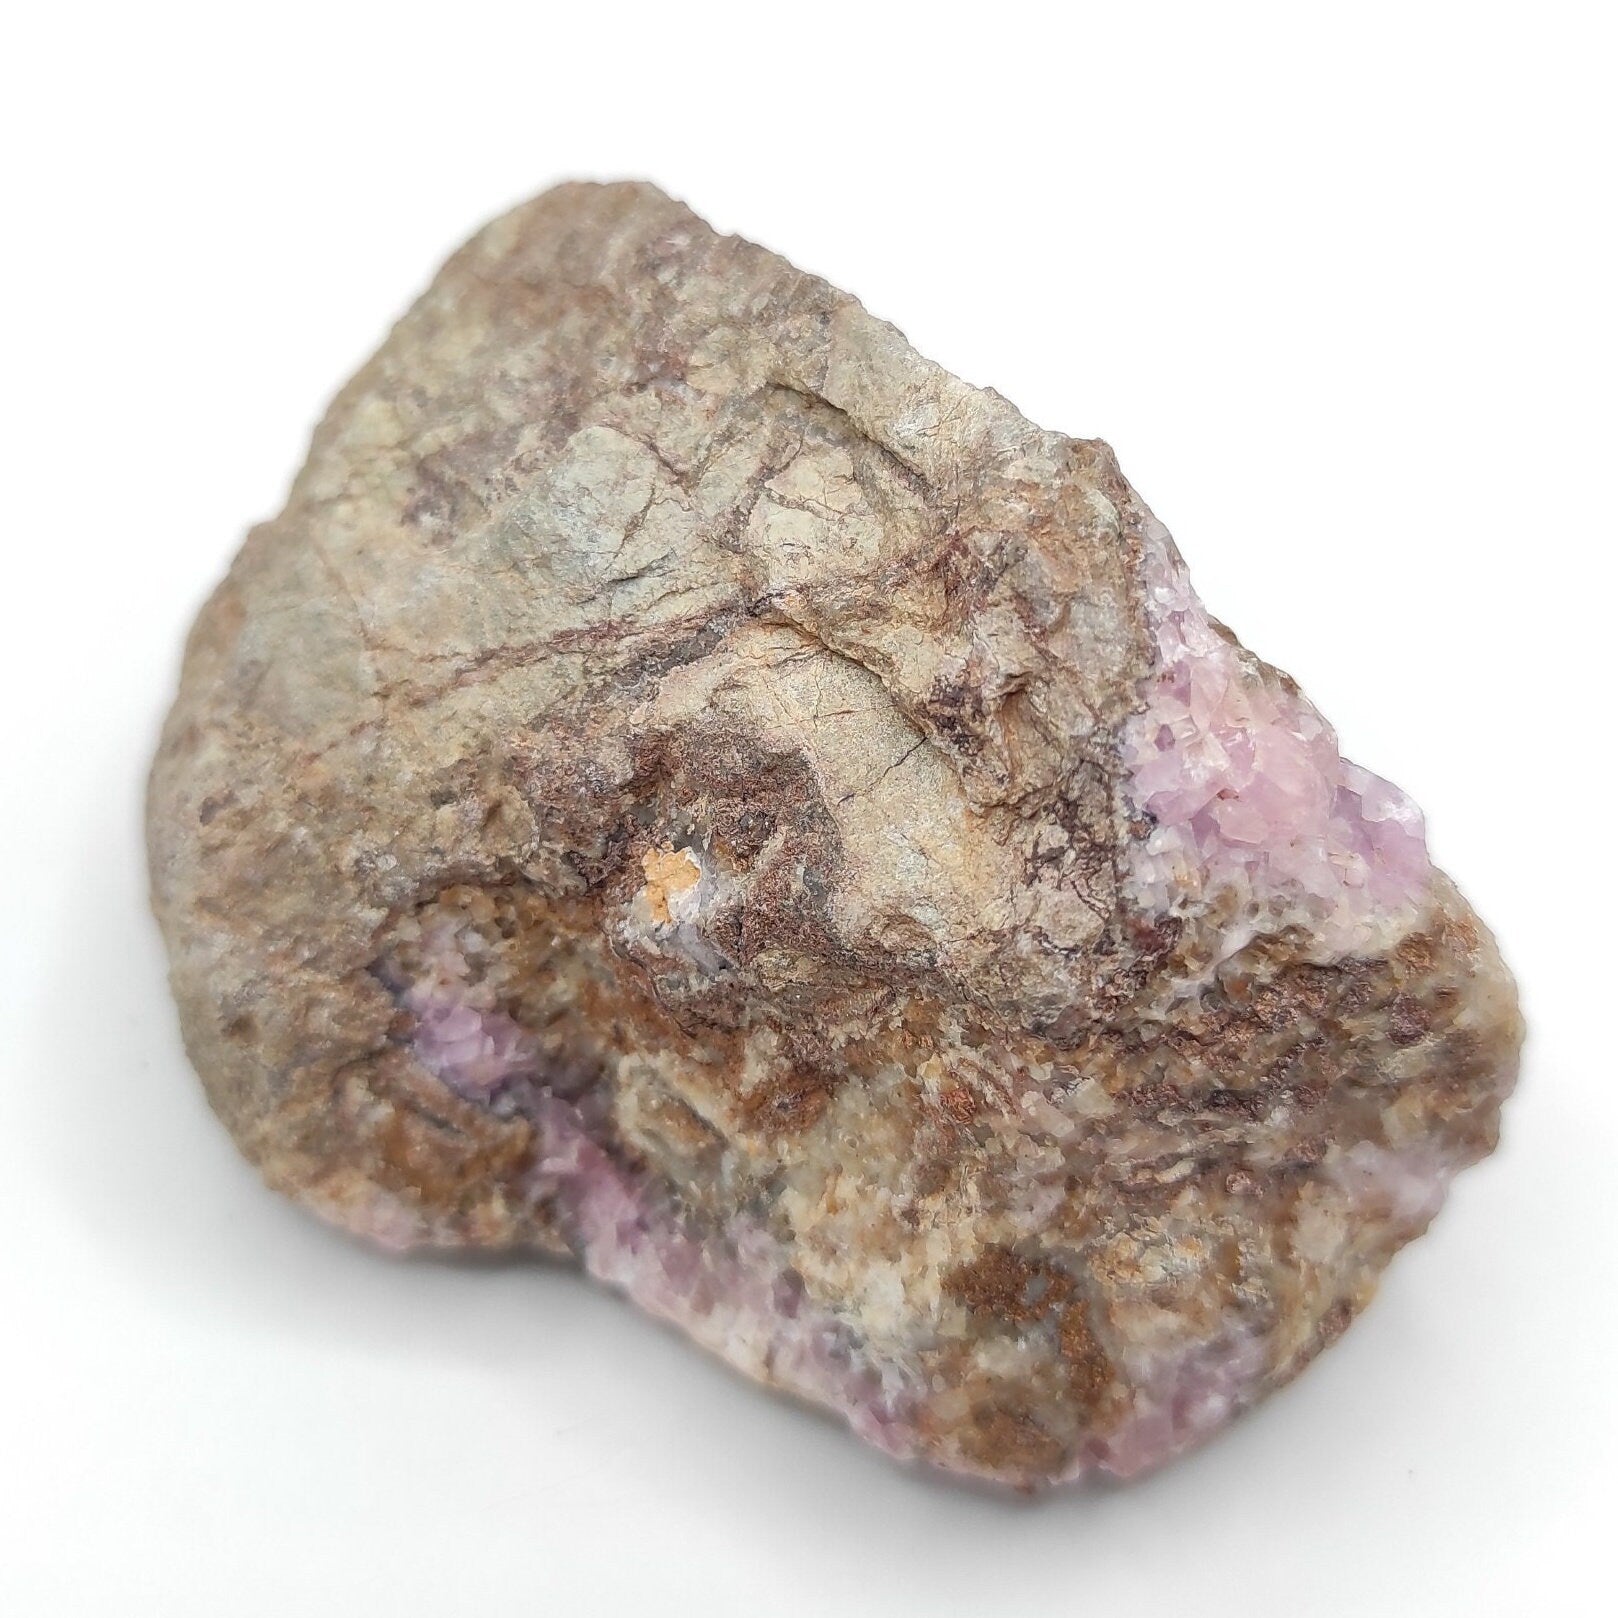 125g Cobalto Calcite in Matrix - Pink Cobalt Calcite from Bou Azzer, Morocco - Salrose Crystal - Cobaltocalcite Mineral Specimen